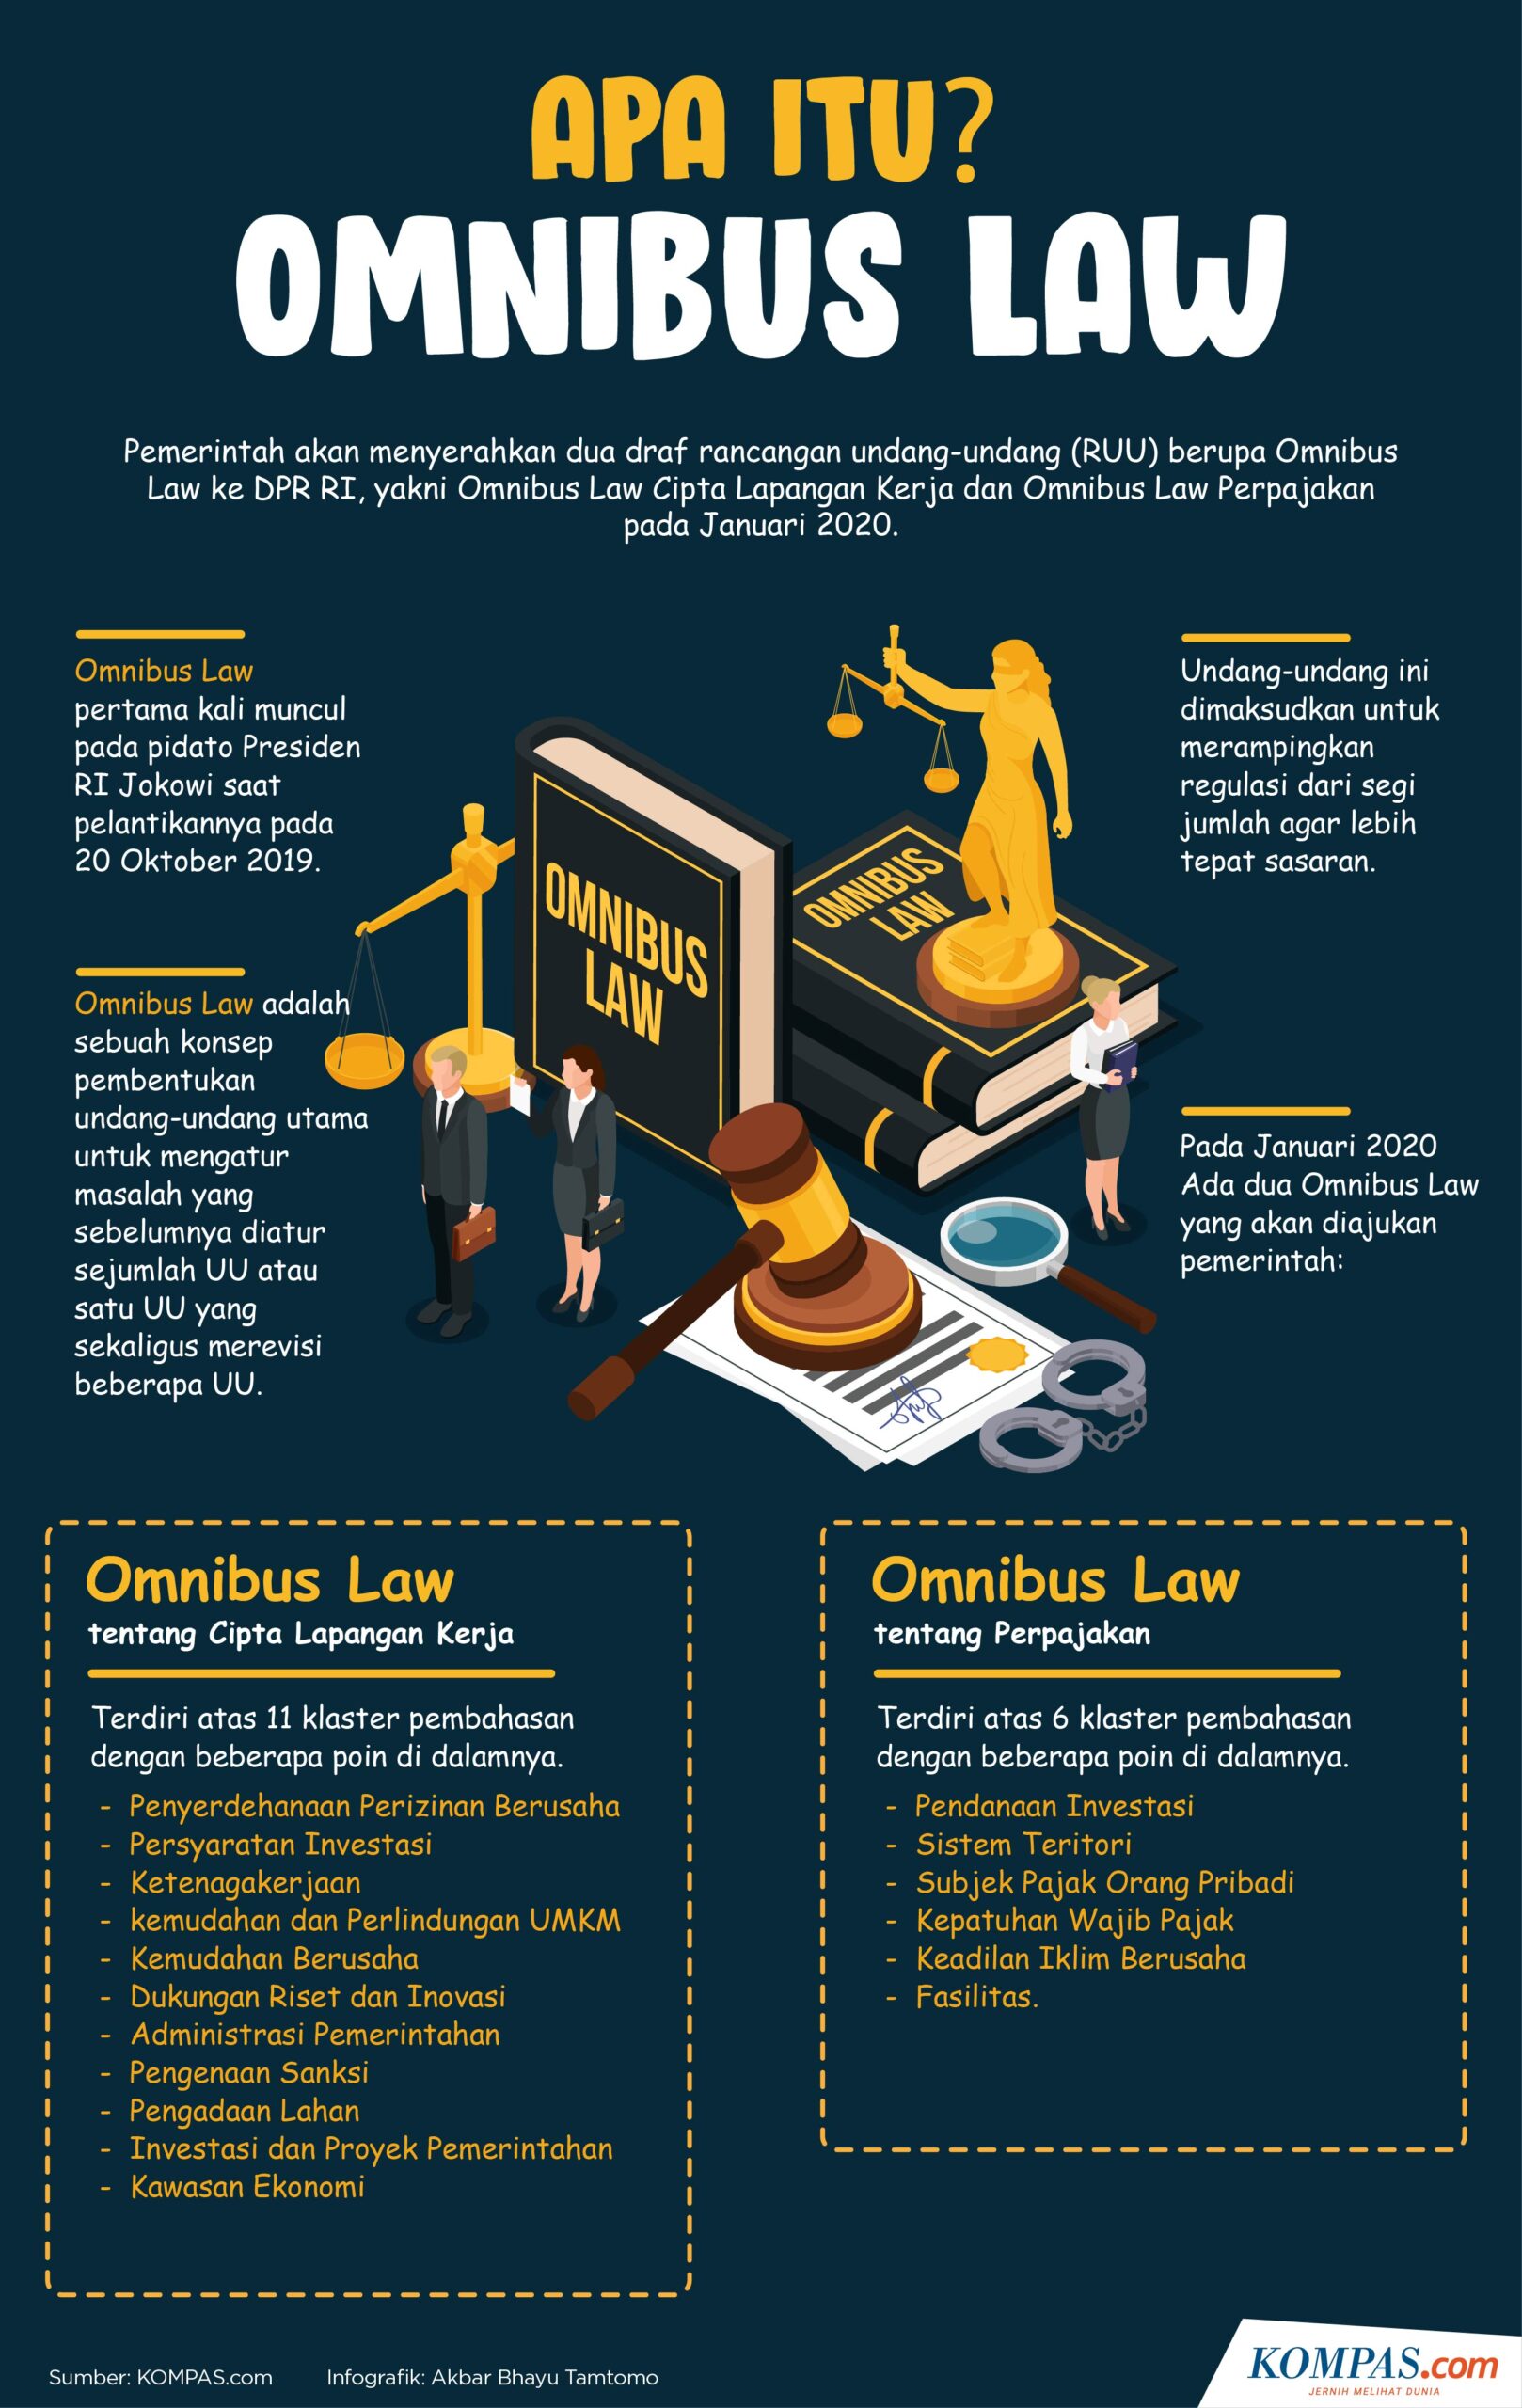 Infografik: Apa Itu Omnibus Law? (KOMPAS.com/Akbar Bhayu Tamtomo)

Infografik: Apa Itu Omnibus Law? (KOMPAS.com/Akbar Bhayu Tamtomo)
